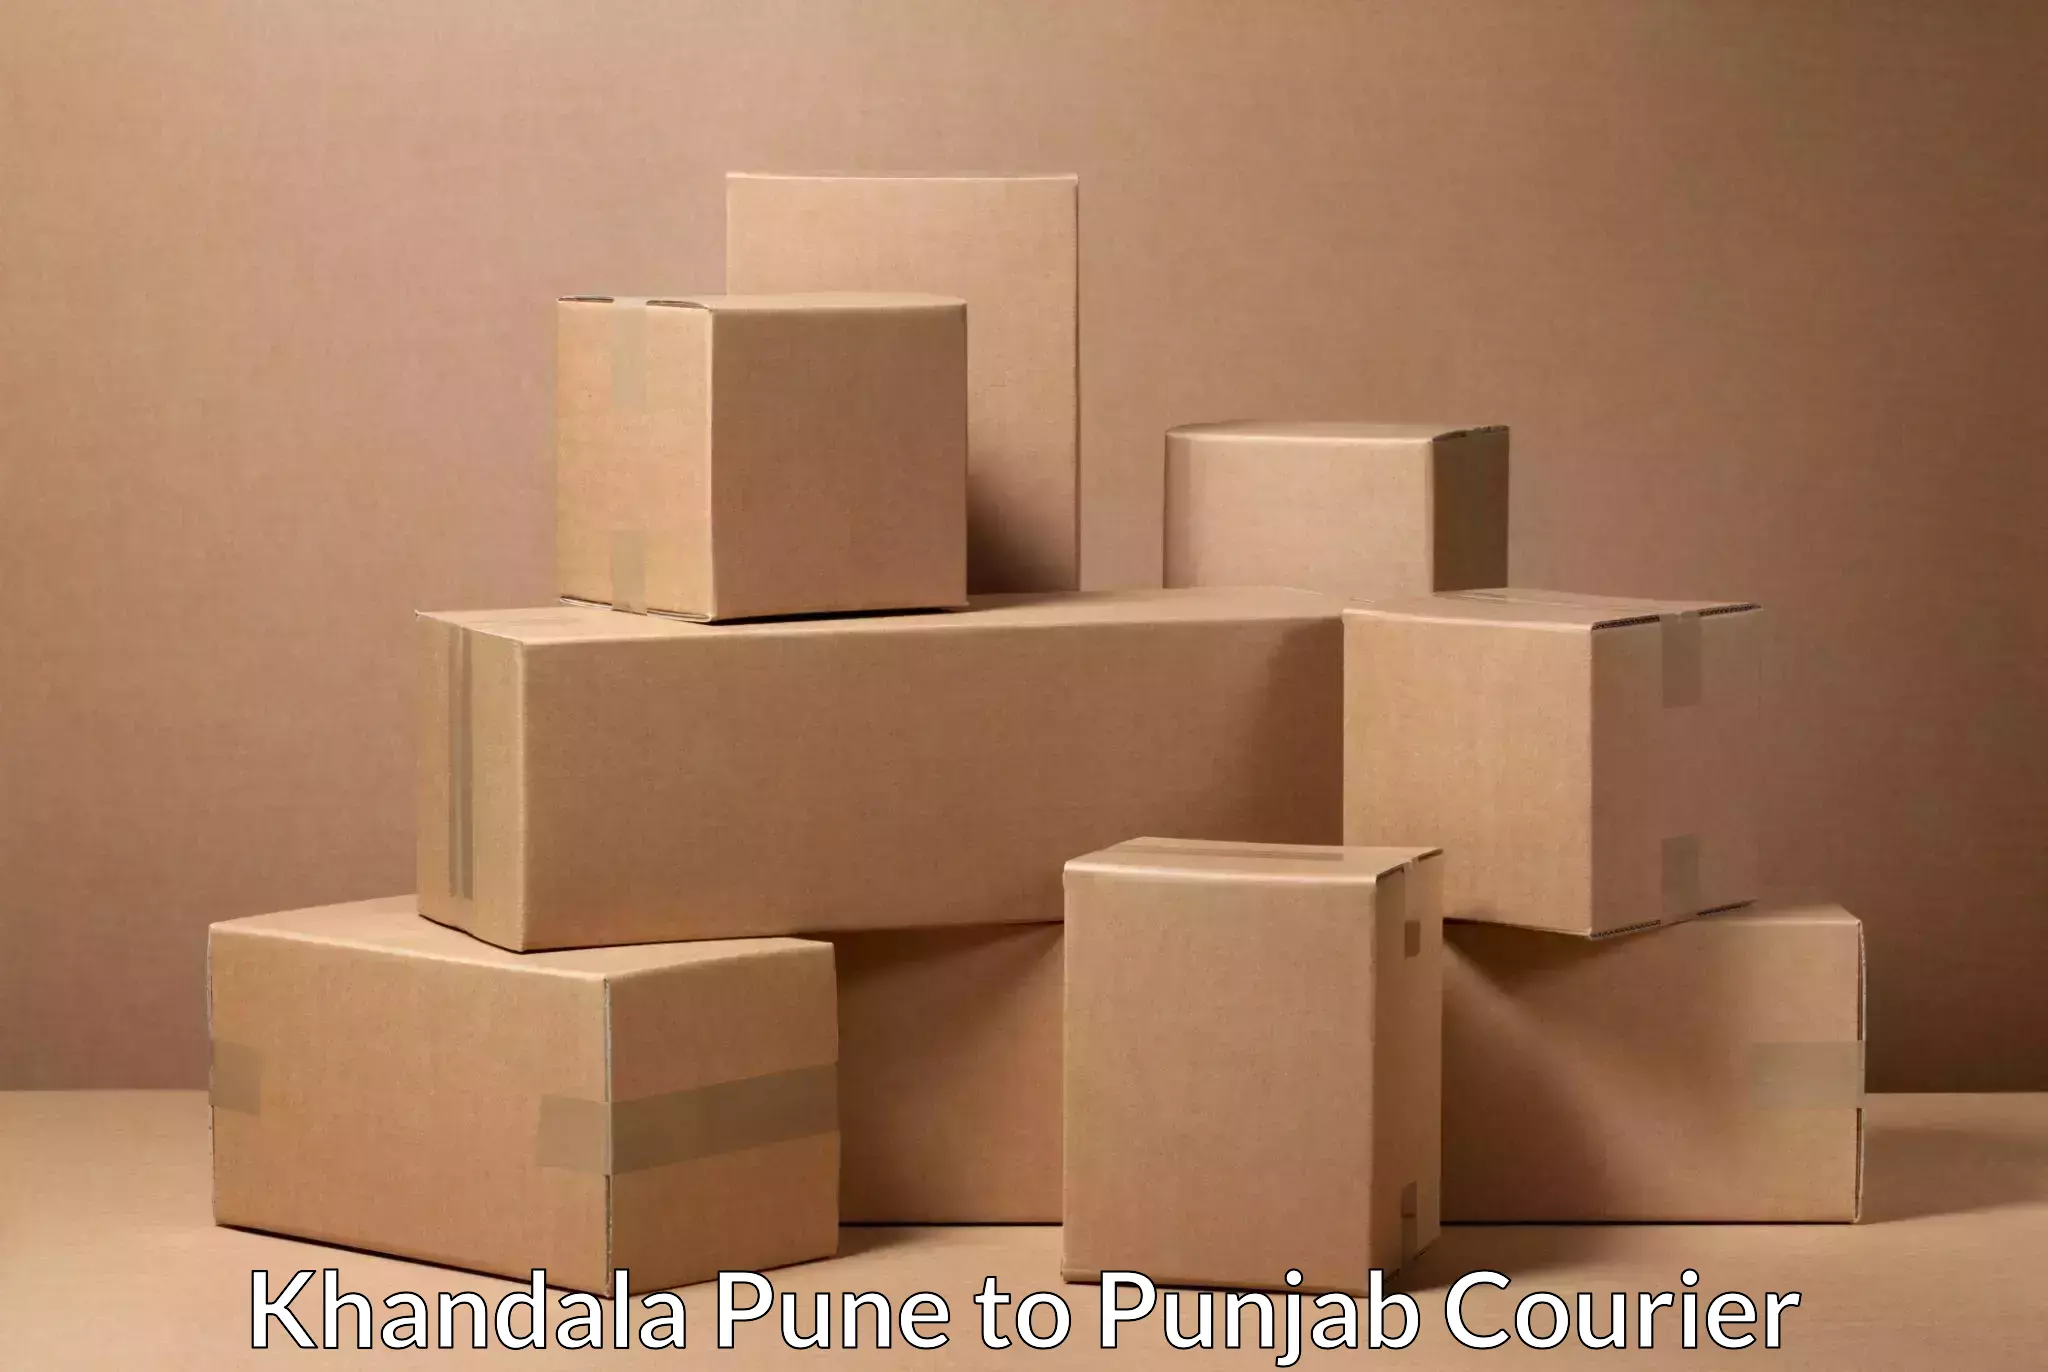 Reliable logistics providers Khandala Pune to Talwara